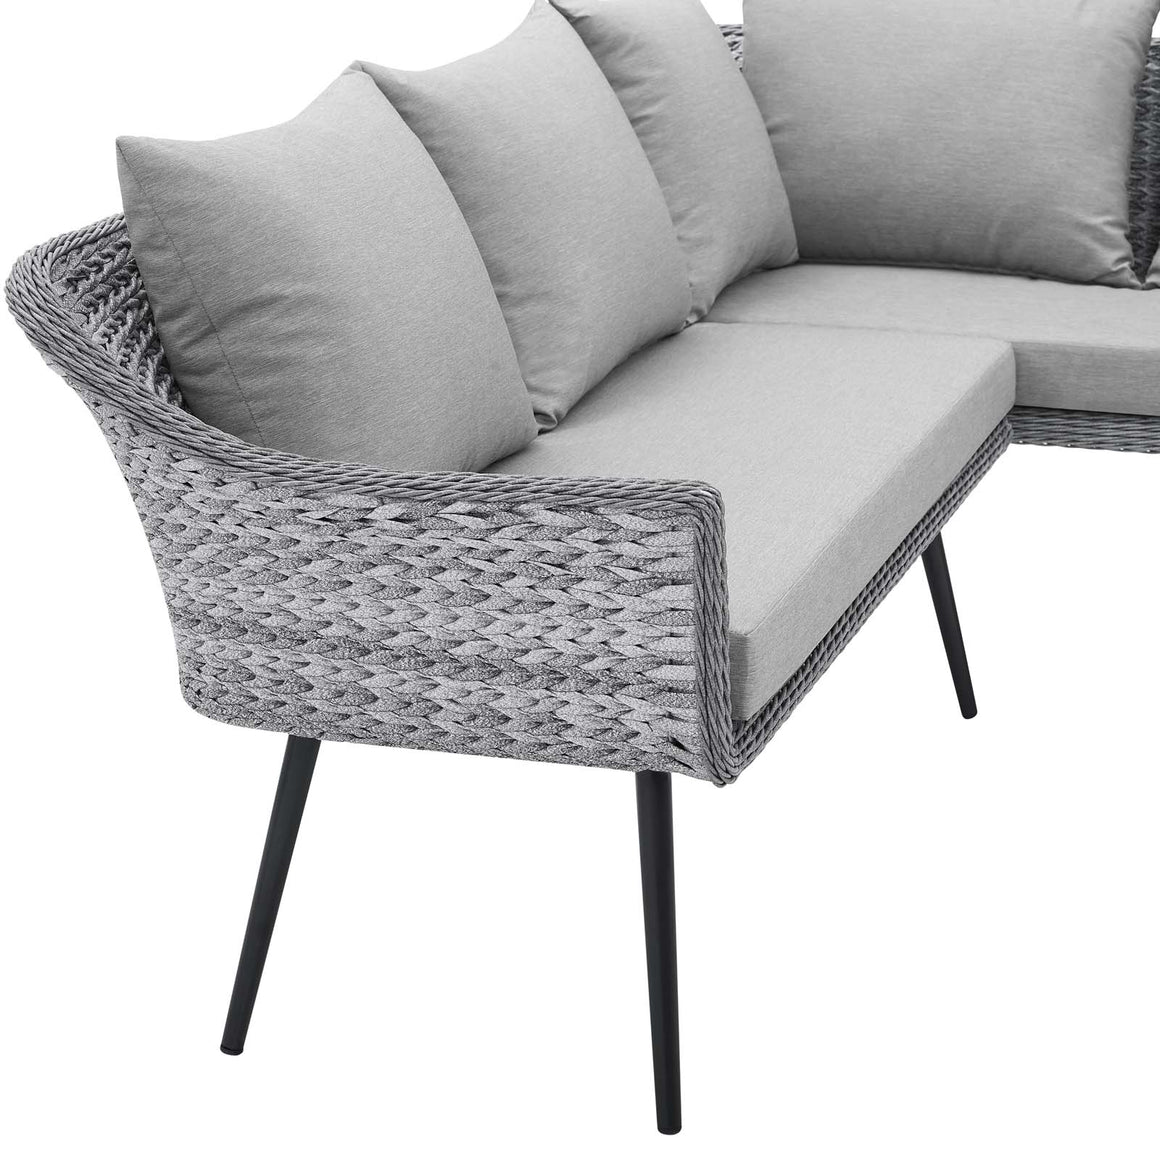 Endeavor Outdoor Patio Wicker Rattan Sectional Sofa